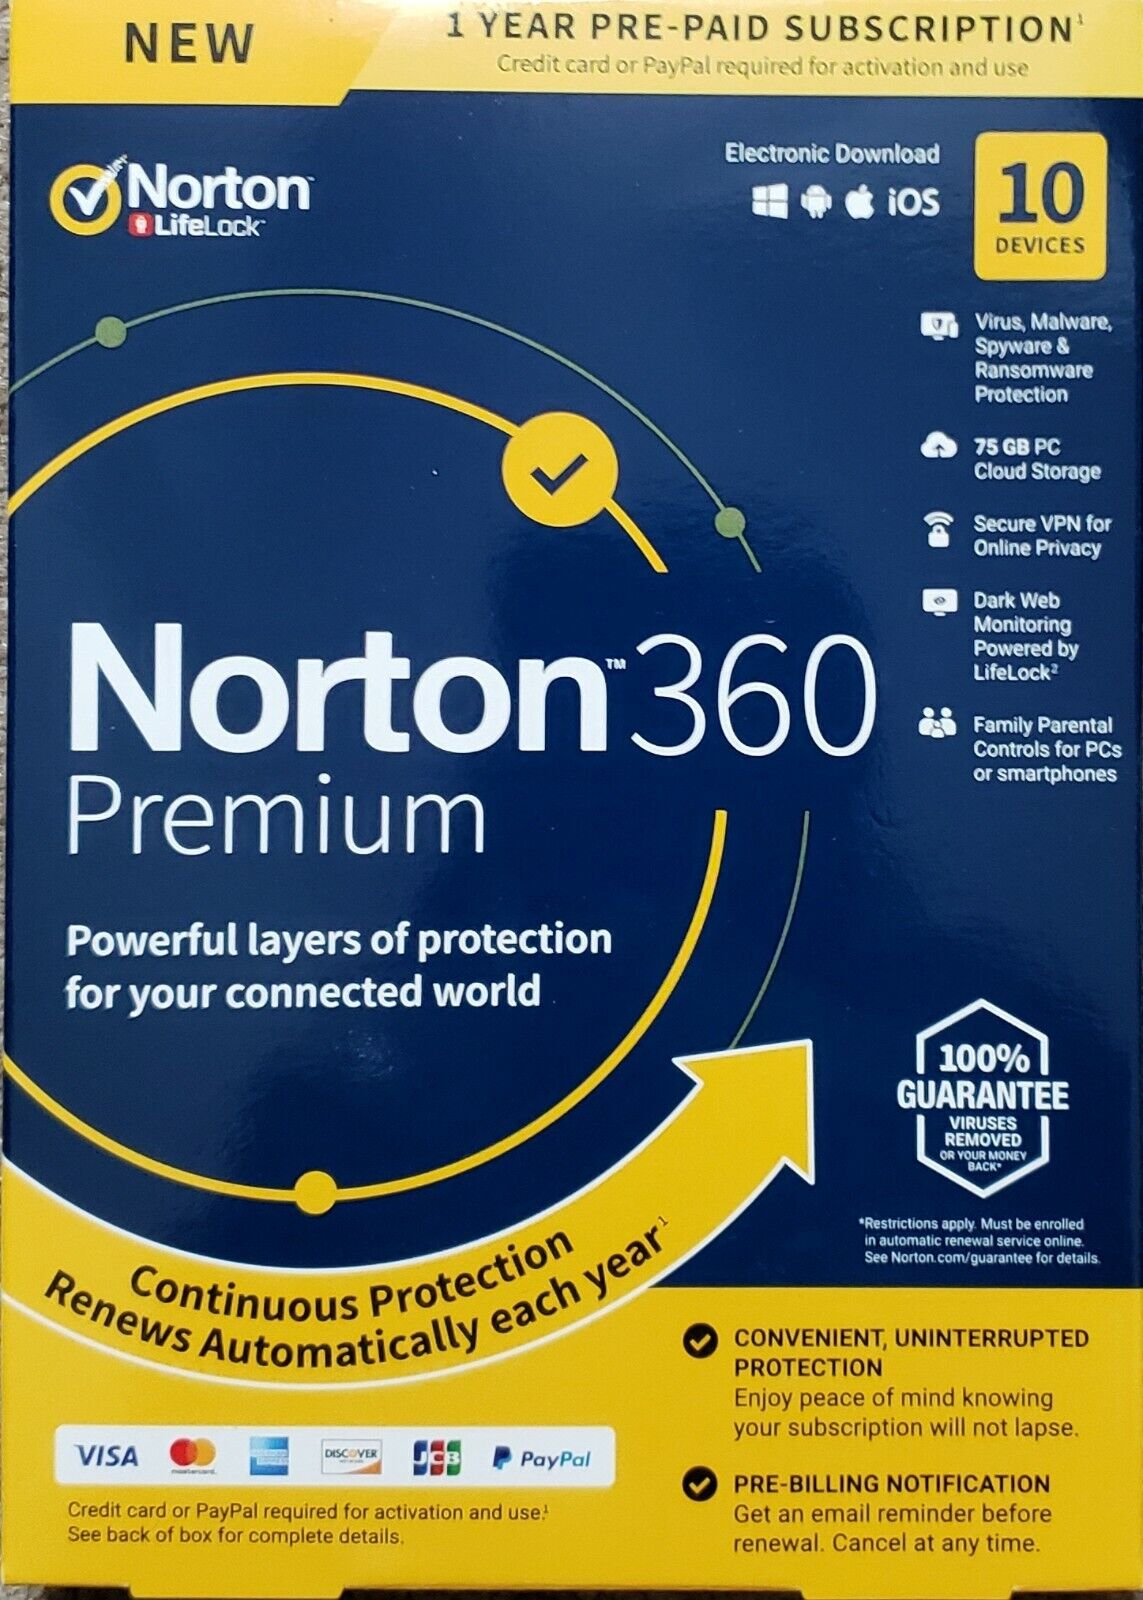 Norton 360 Premium 10 Devices VPN 75GB Secure PC Cloud Backup Download New